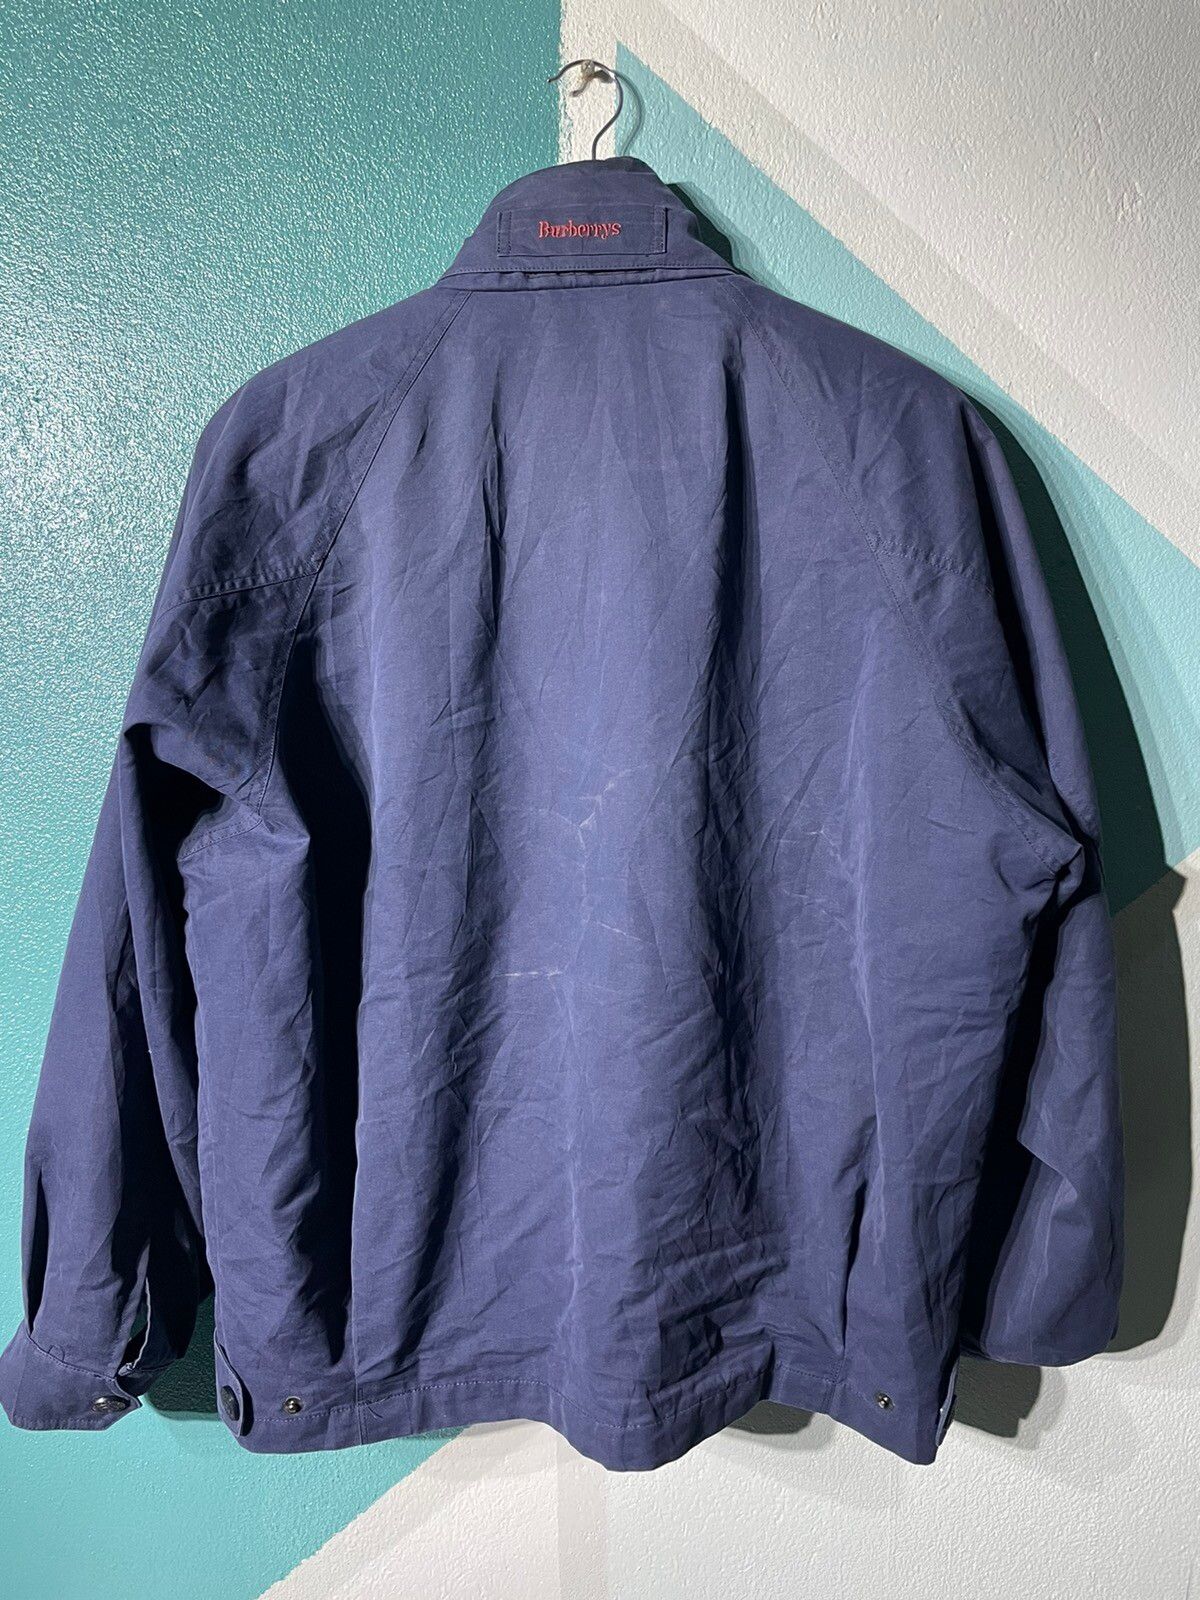 DELETE IN 24h‼️ Burberry reversible big logo jacket - 6